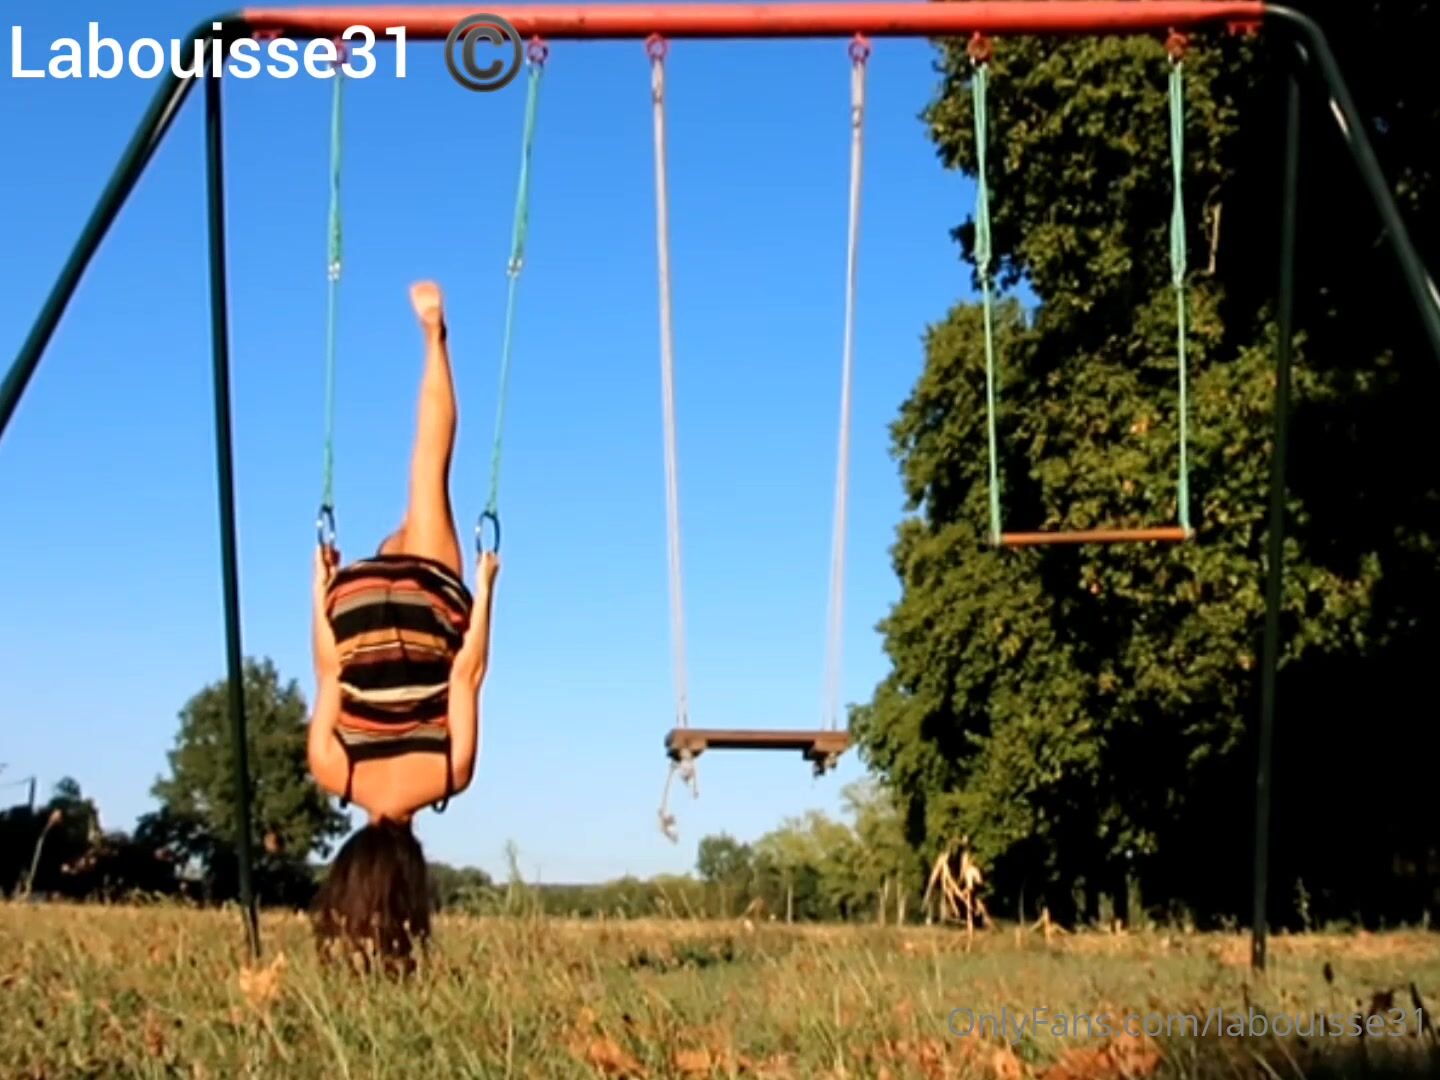 Labouisse on playground swings public flashing